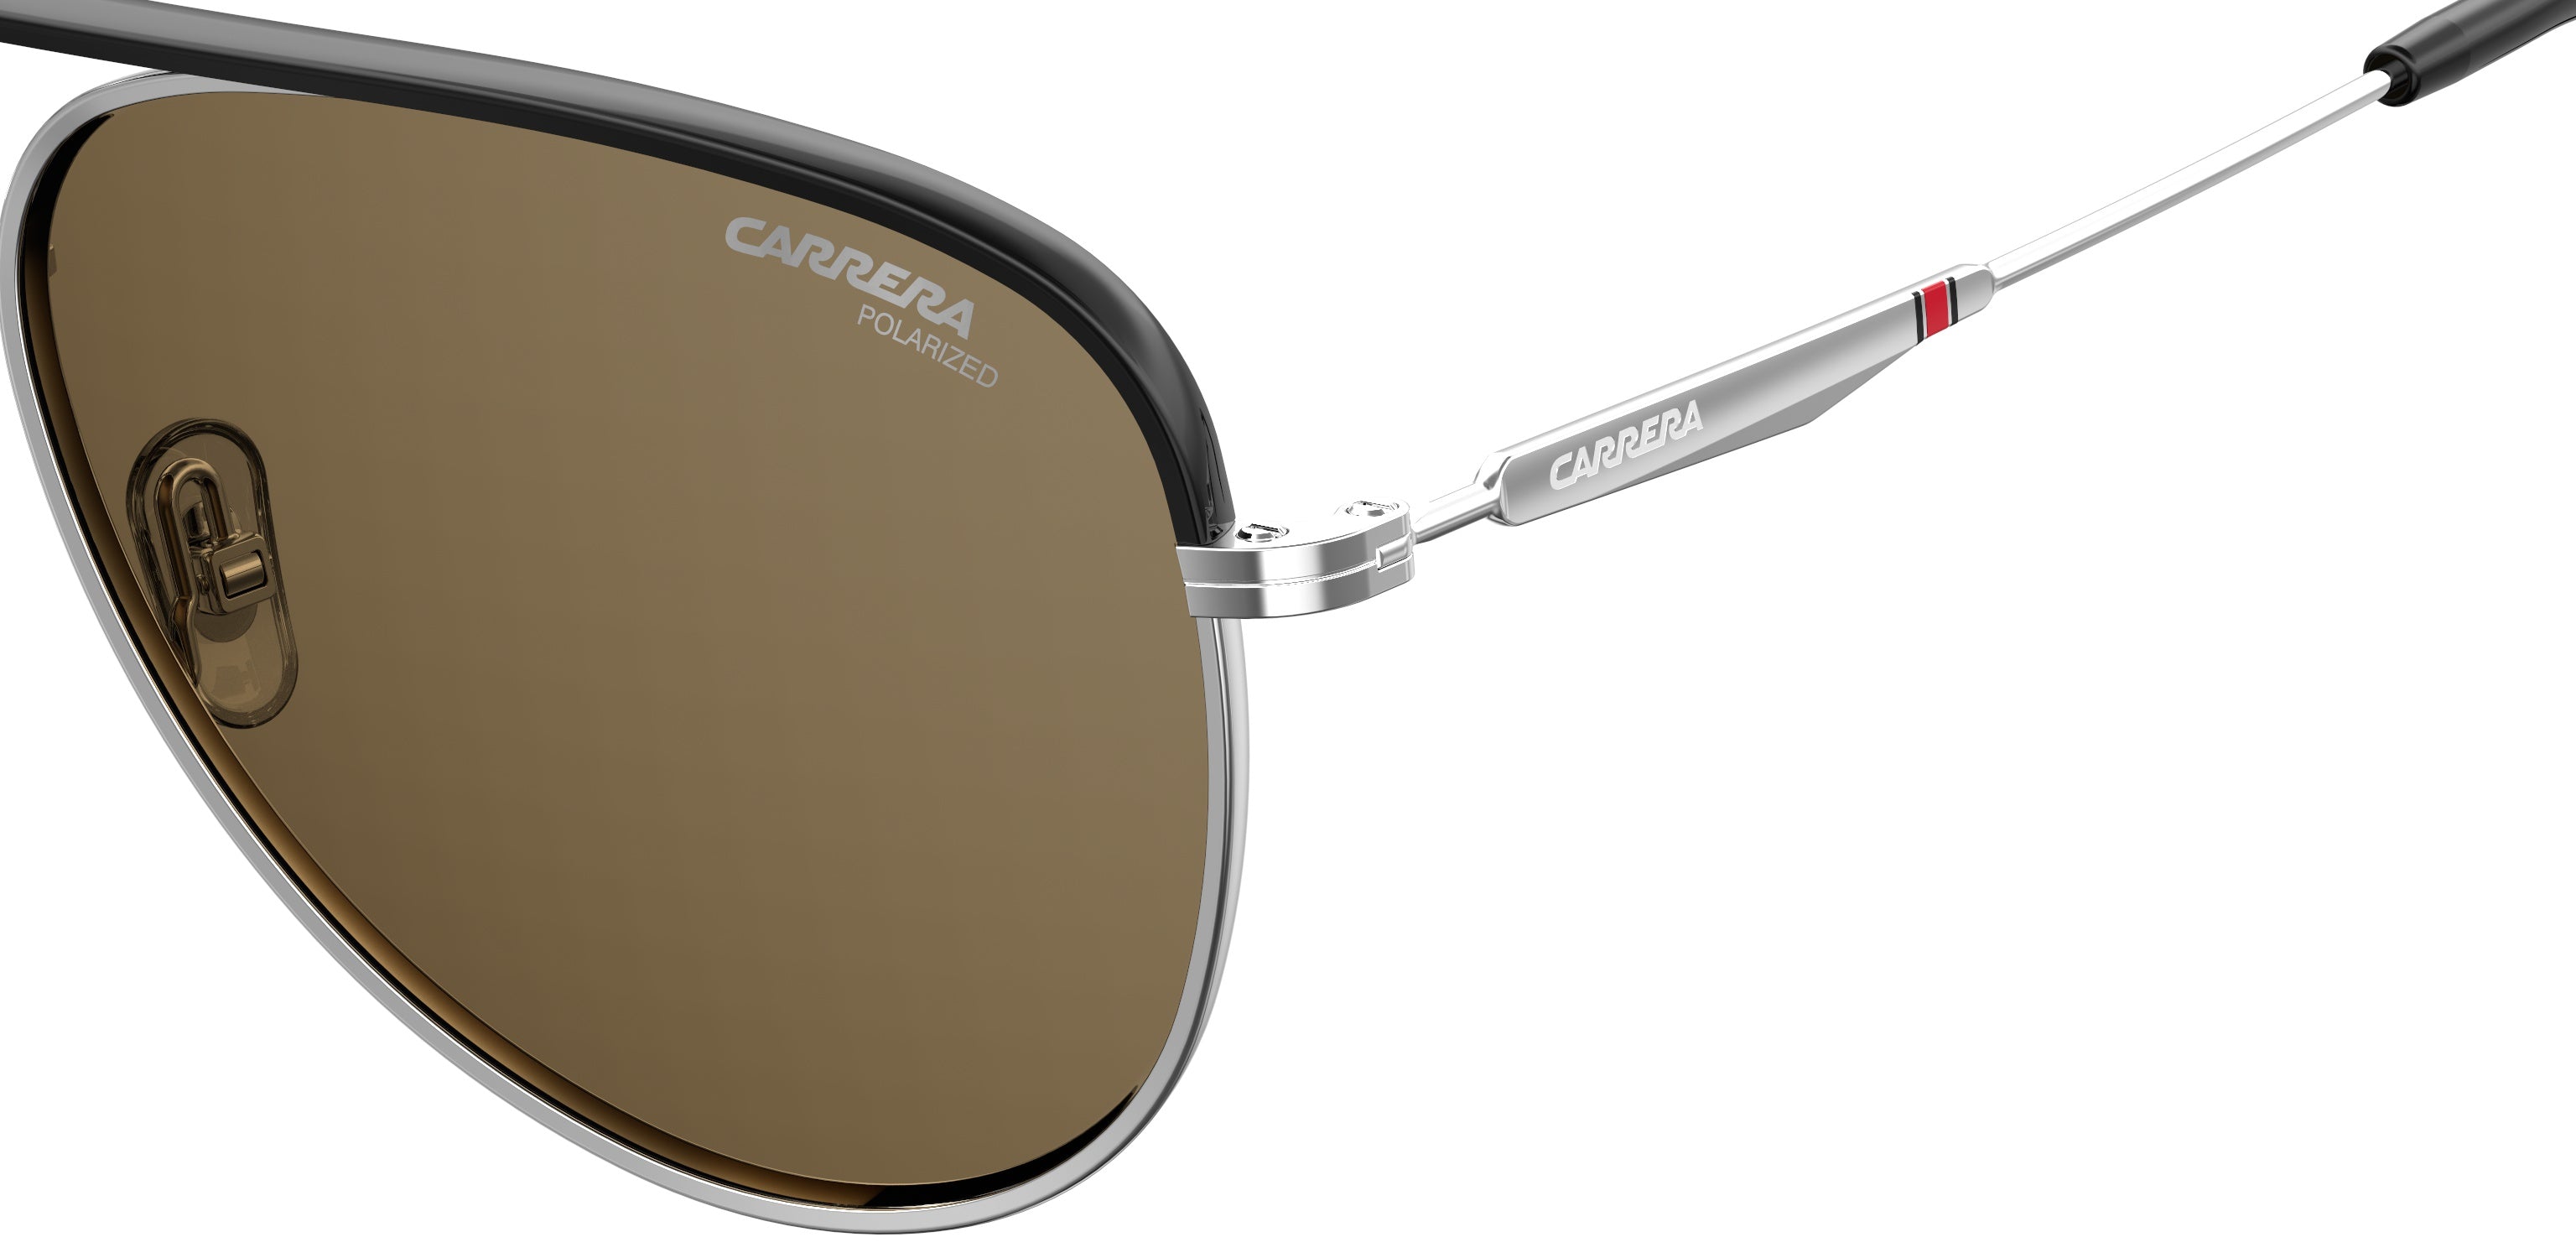 Carrera Pilot Sunglasses